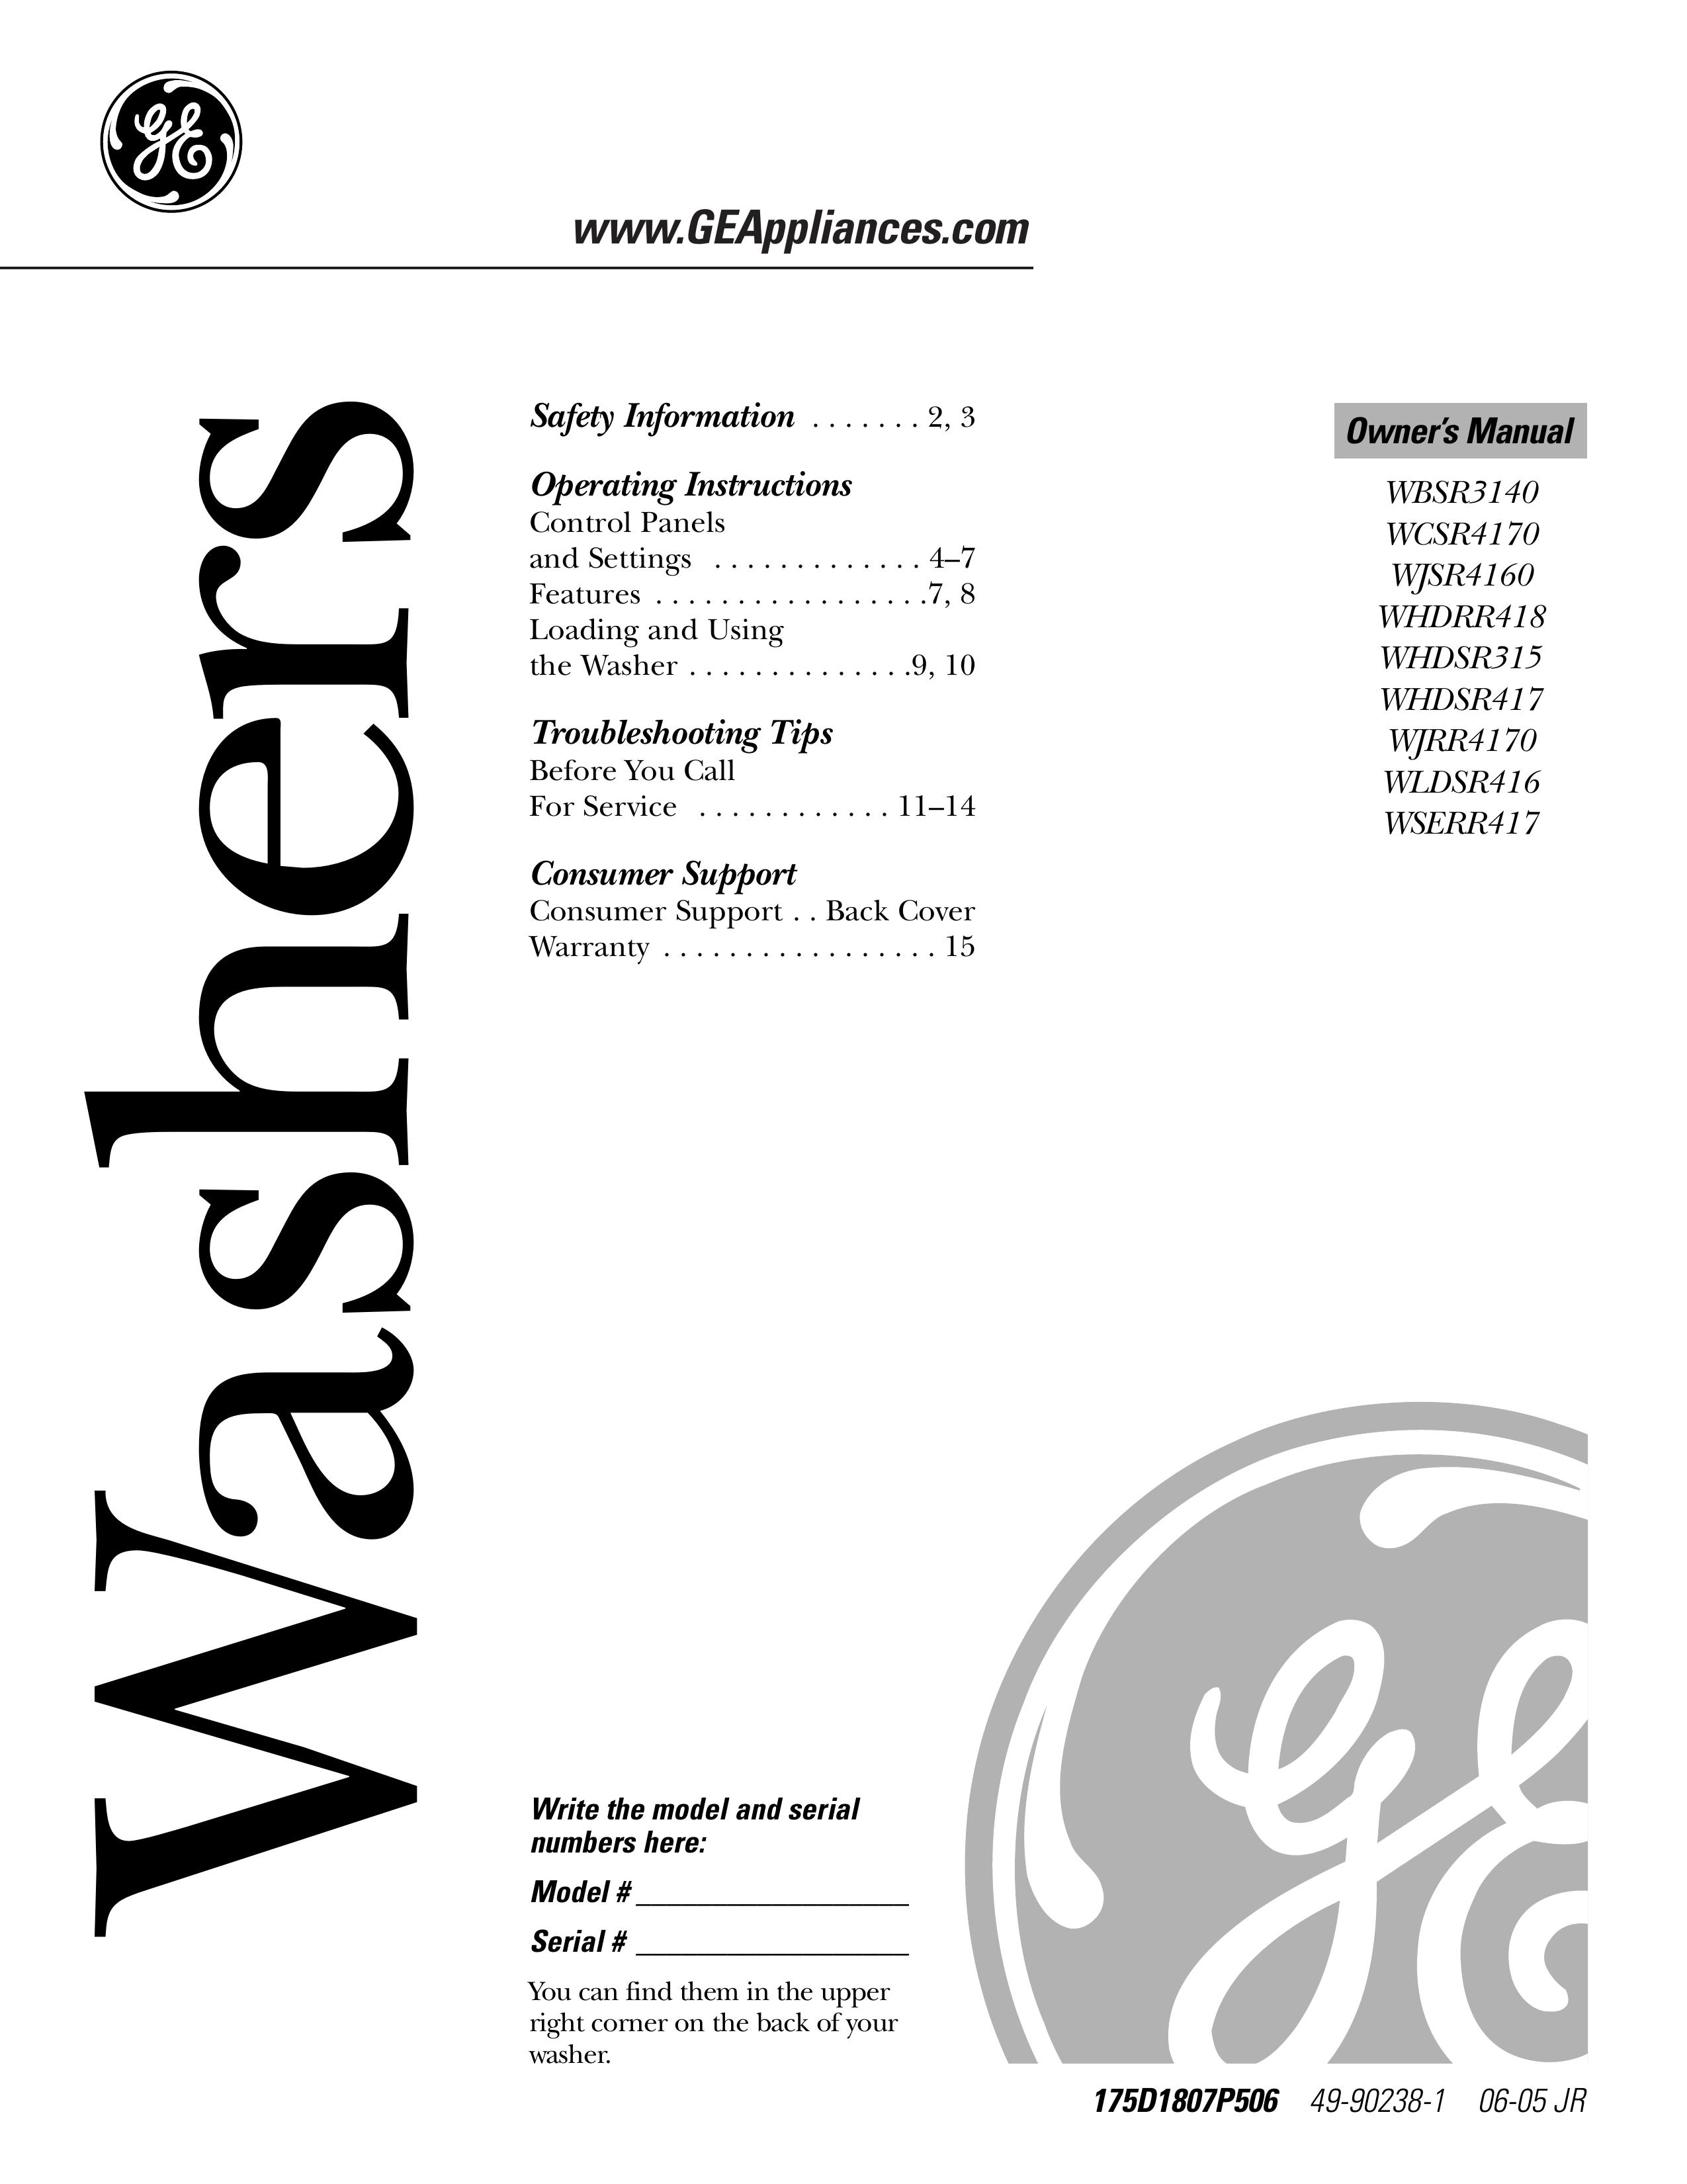 GE Monogram WHDSR417 Washer/Dryer User Manual